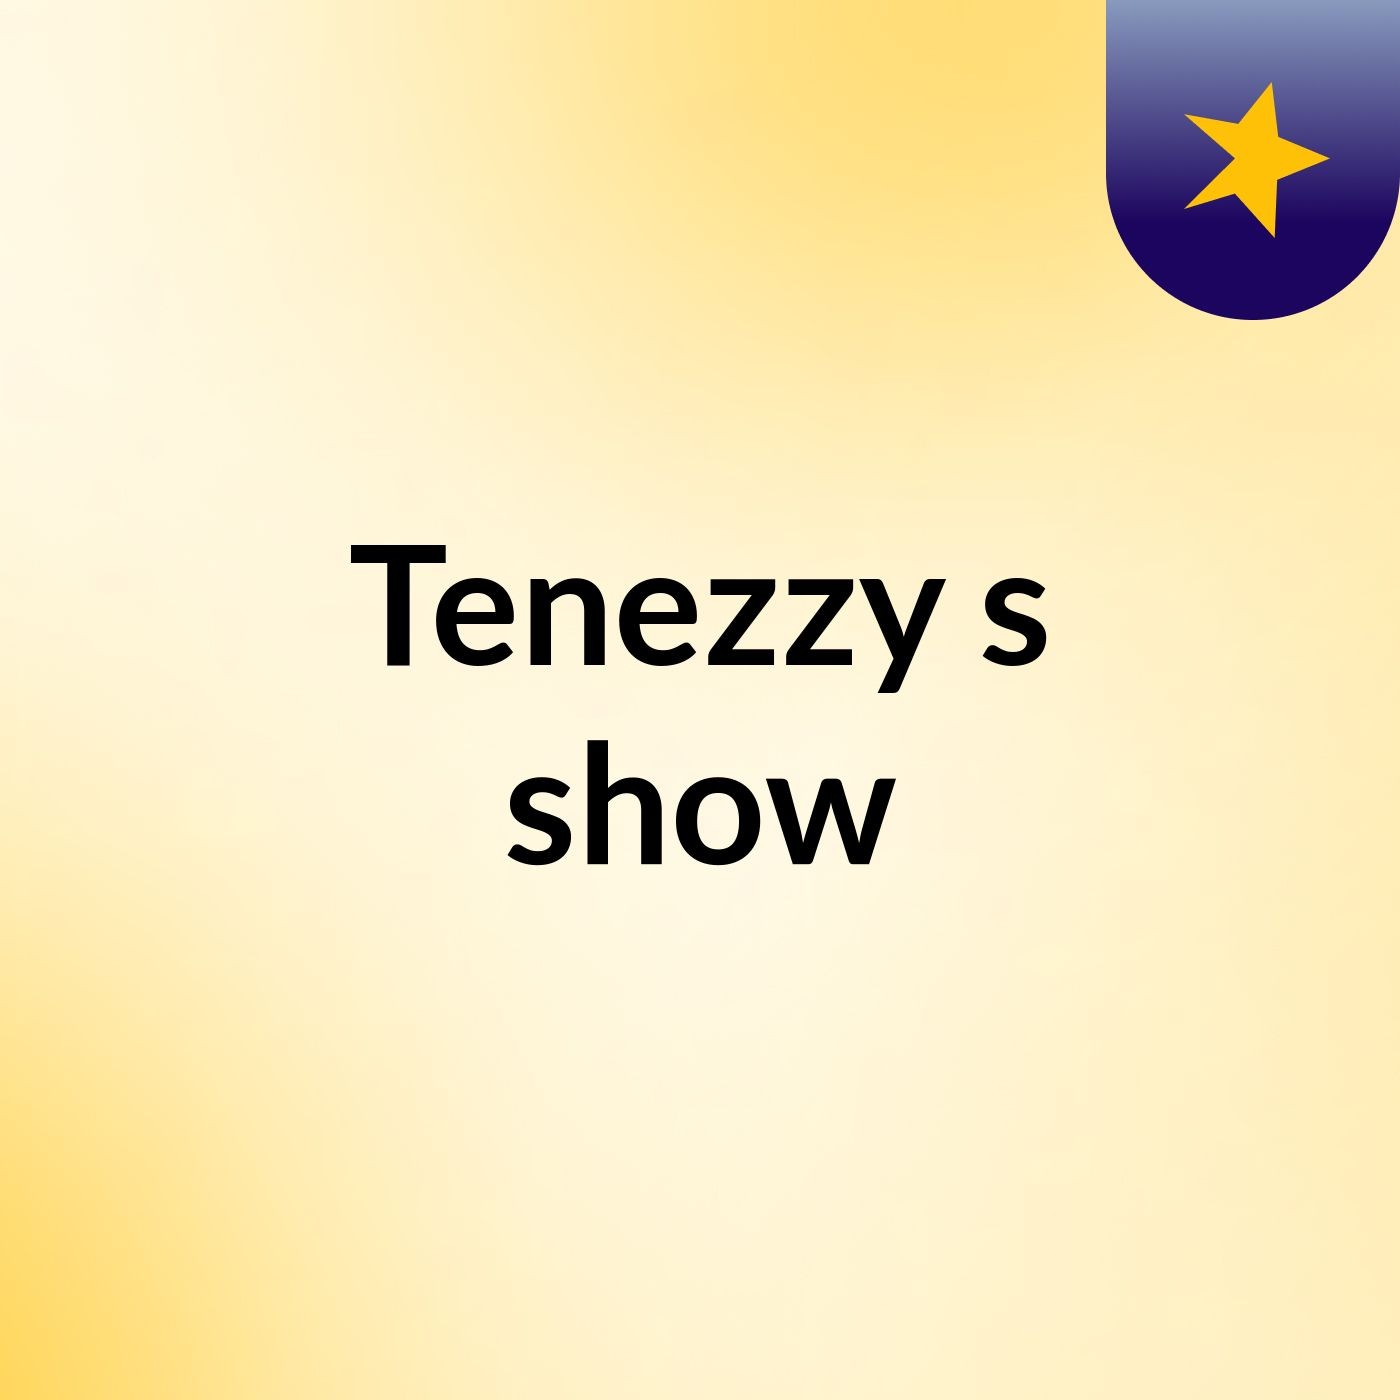 Tenezzy's show